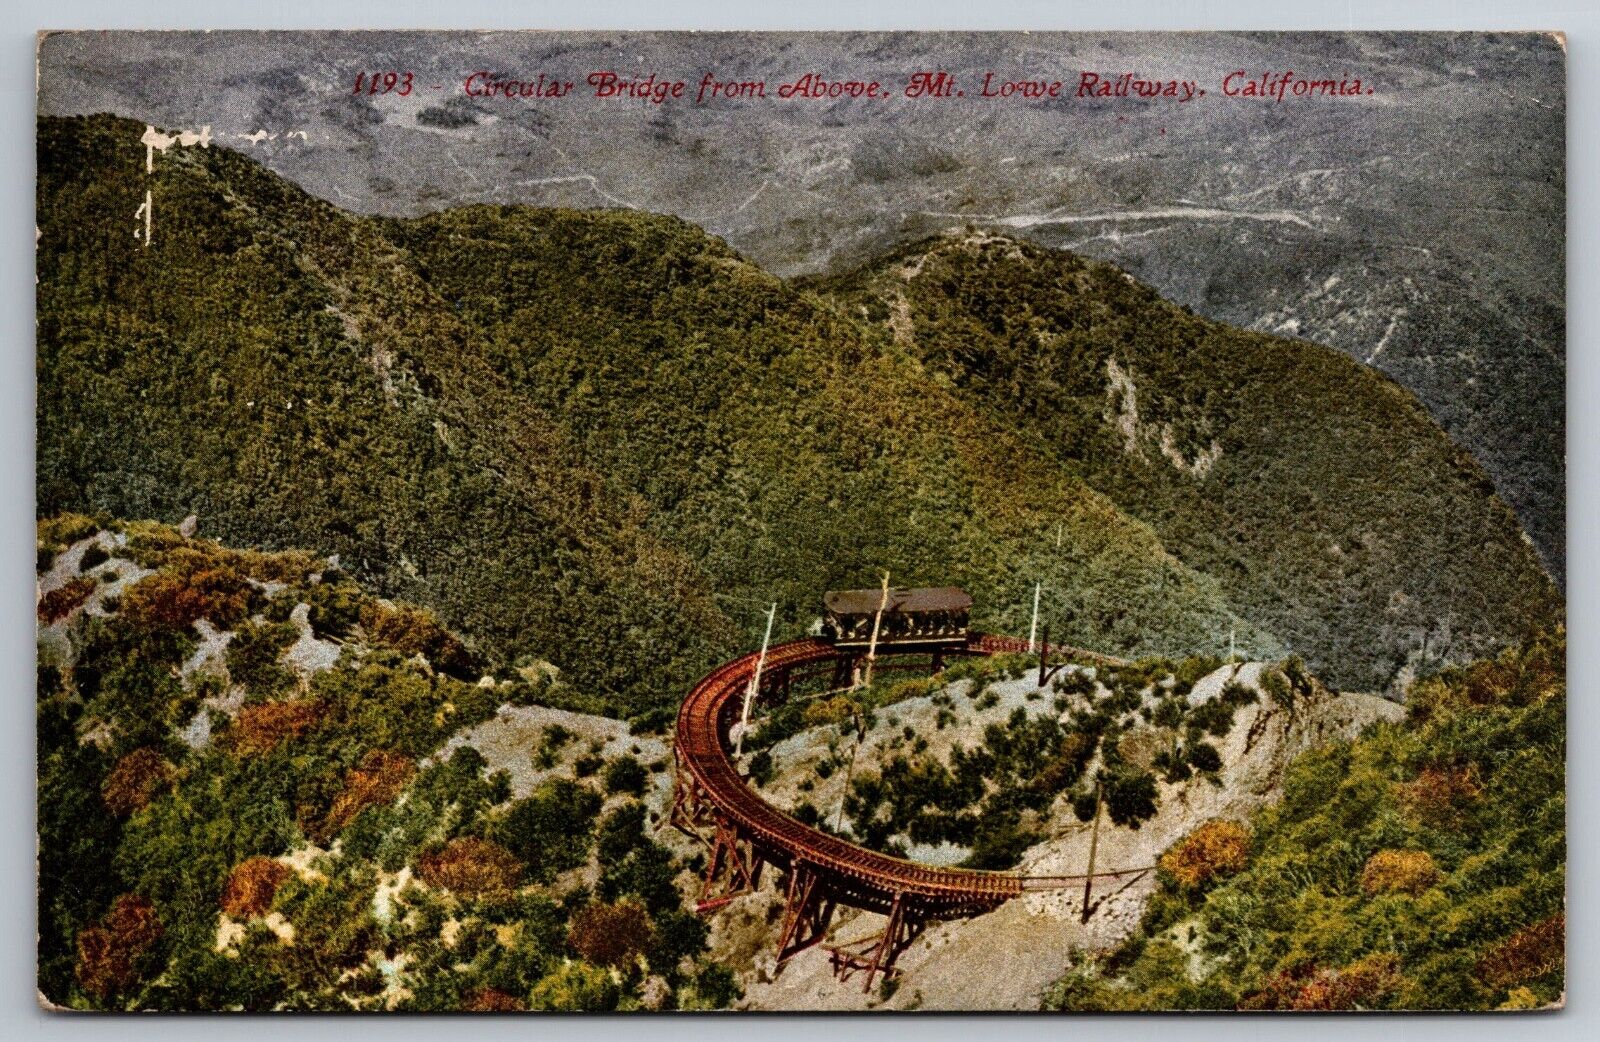 1915 Mt Lowe Railway. Circular Bridge from Above. California Postcard